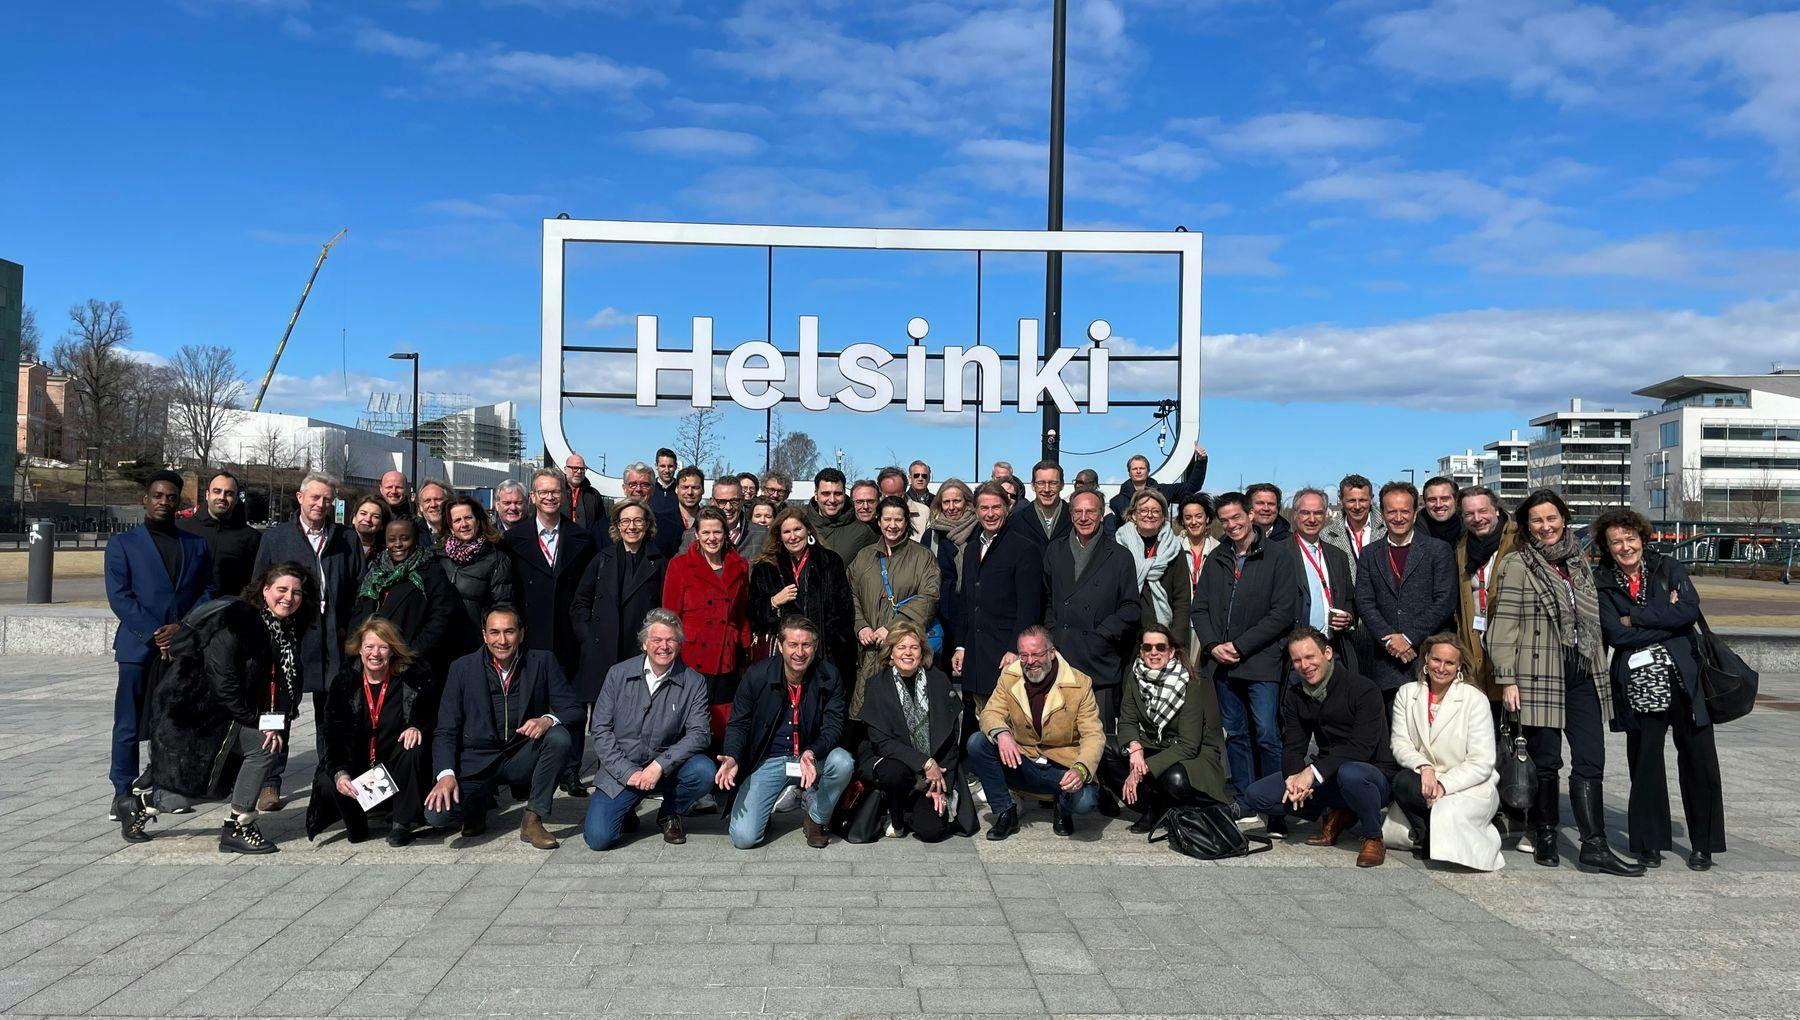 Helsinki, april 2022:  De jaarlijkse driedaagse MAC netwerkreis o.l.v. locoburgemeester Egbert de Vries